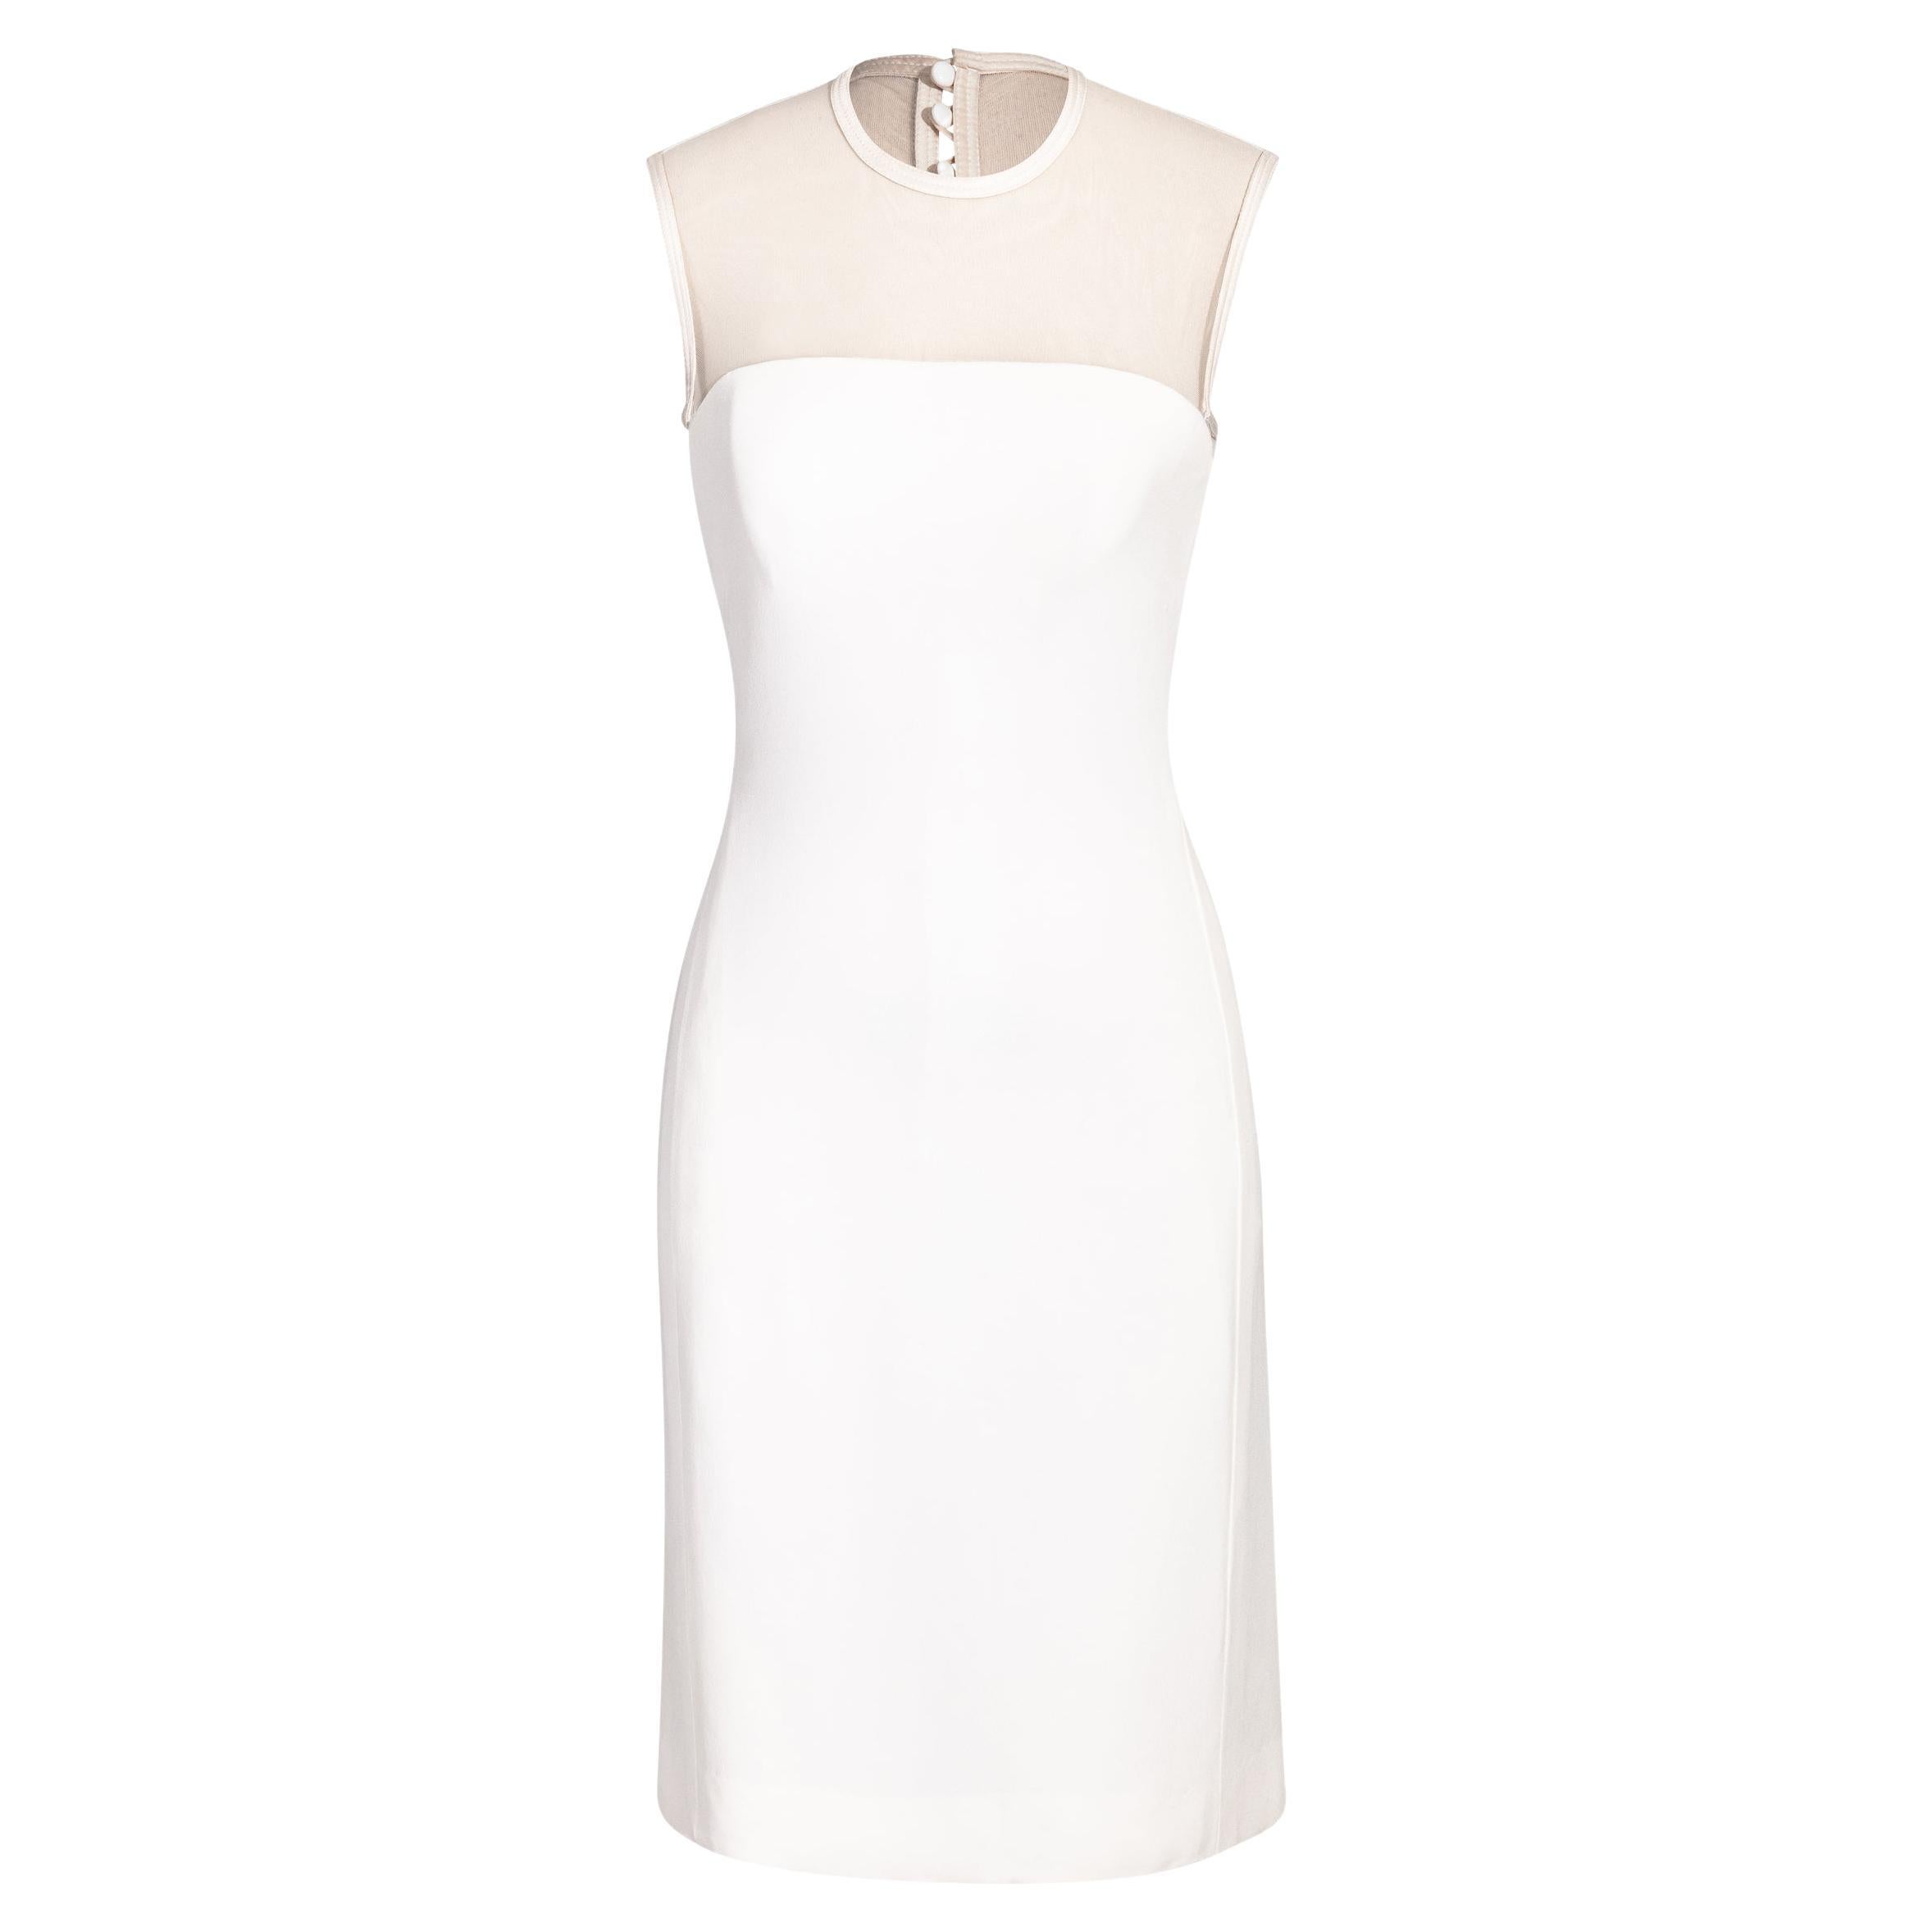 S/S 1996 Gianni Versace White Mesh Mini Dress